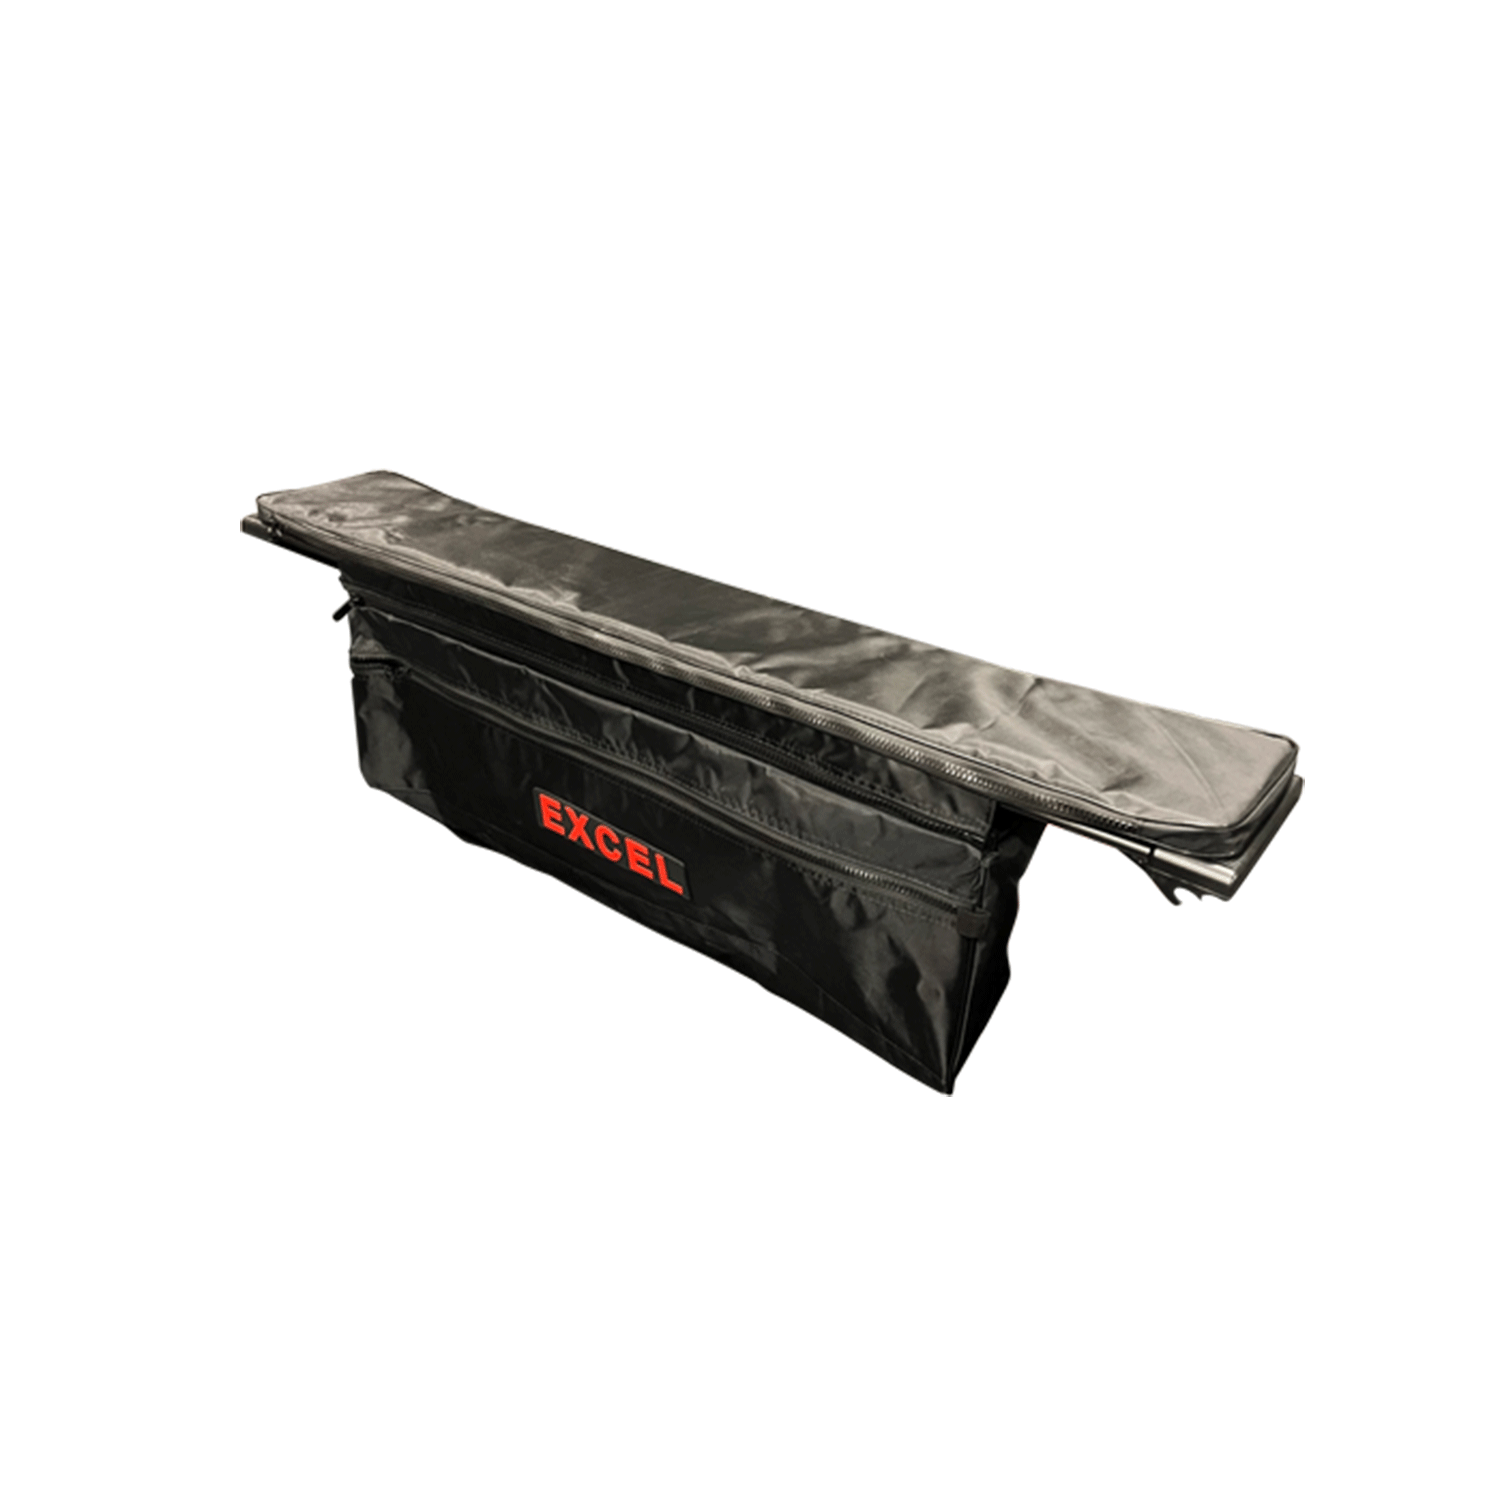 EXCEL-Seat-Cushion-Storage-Bag-Medium-Black